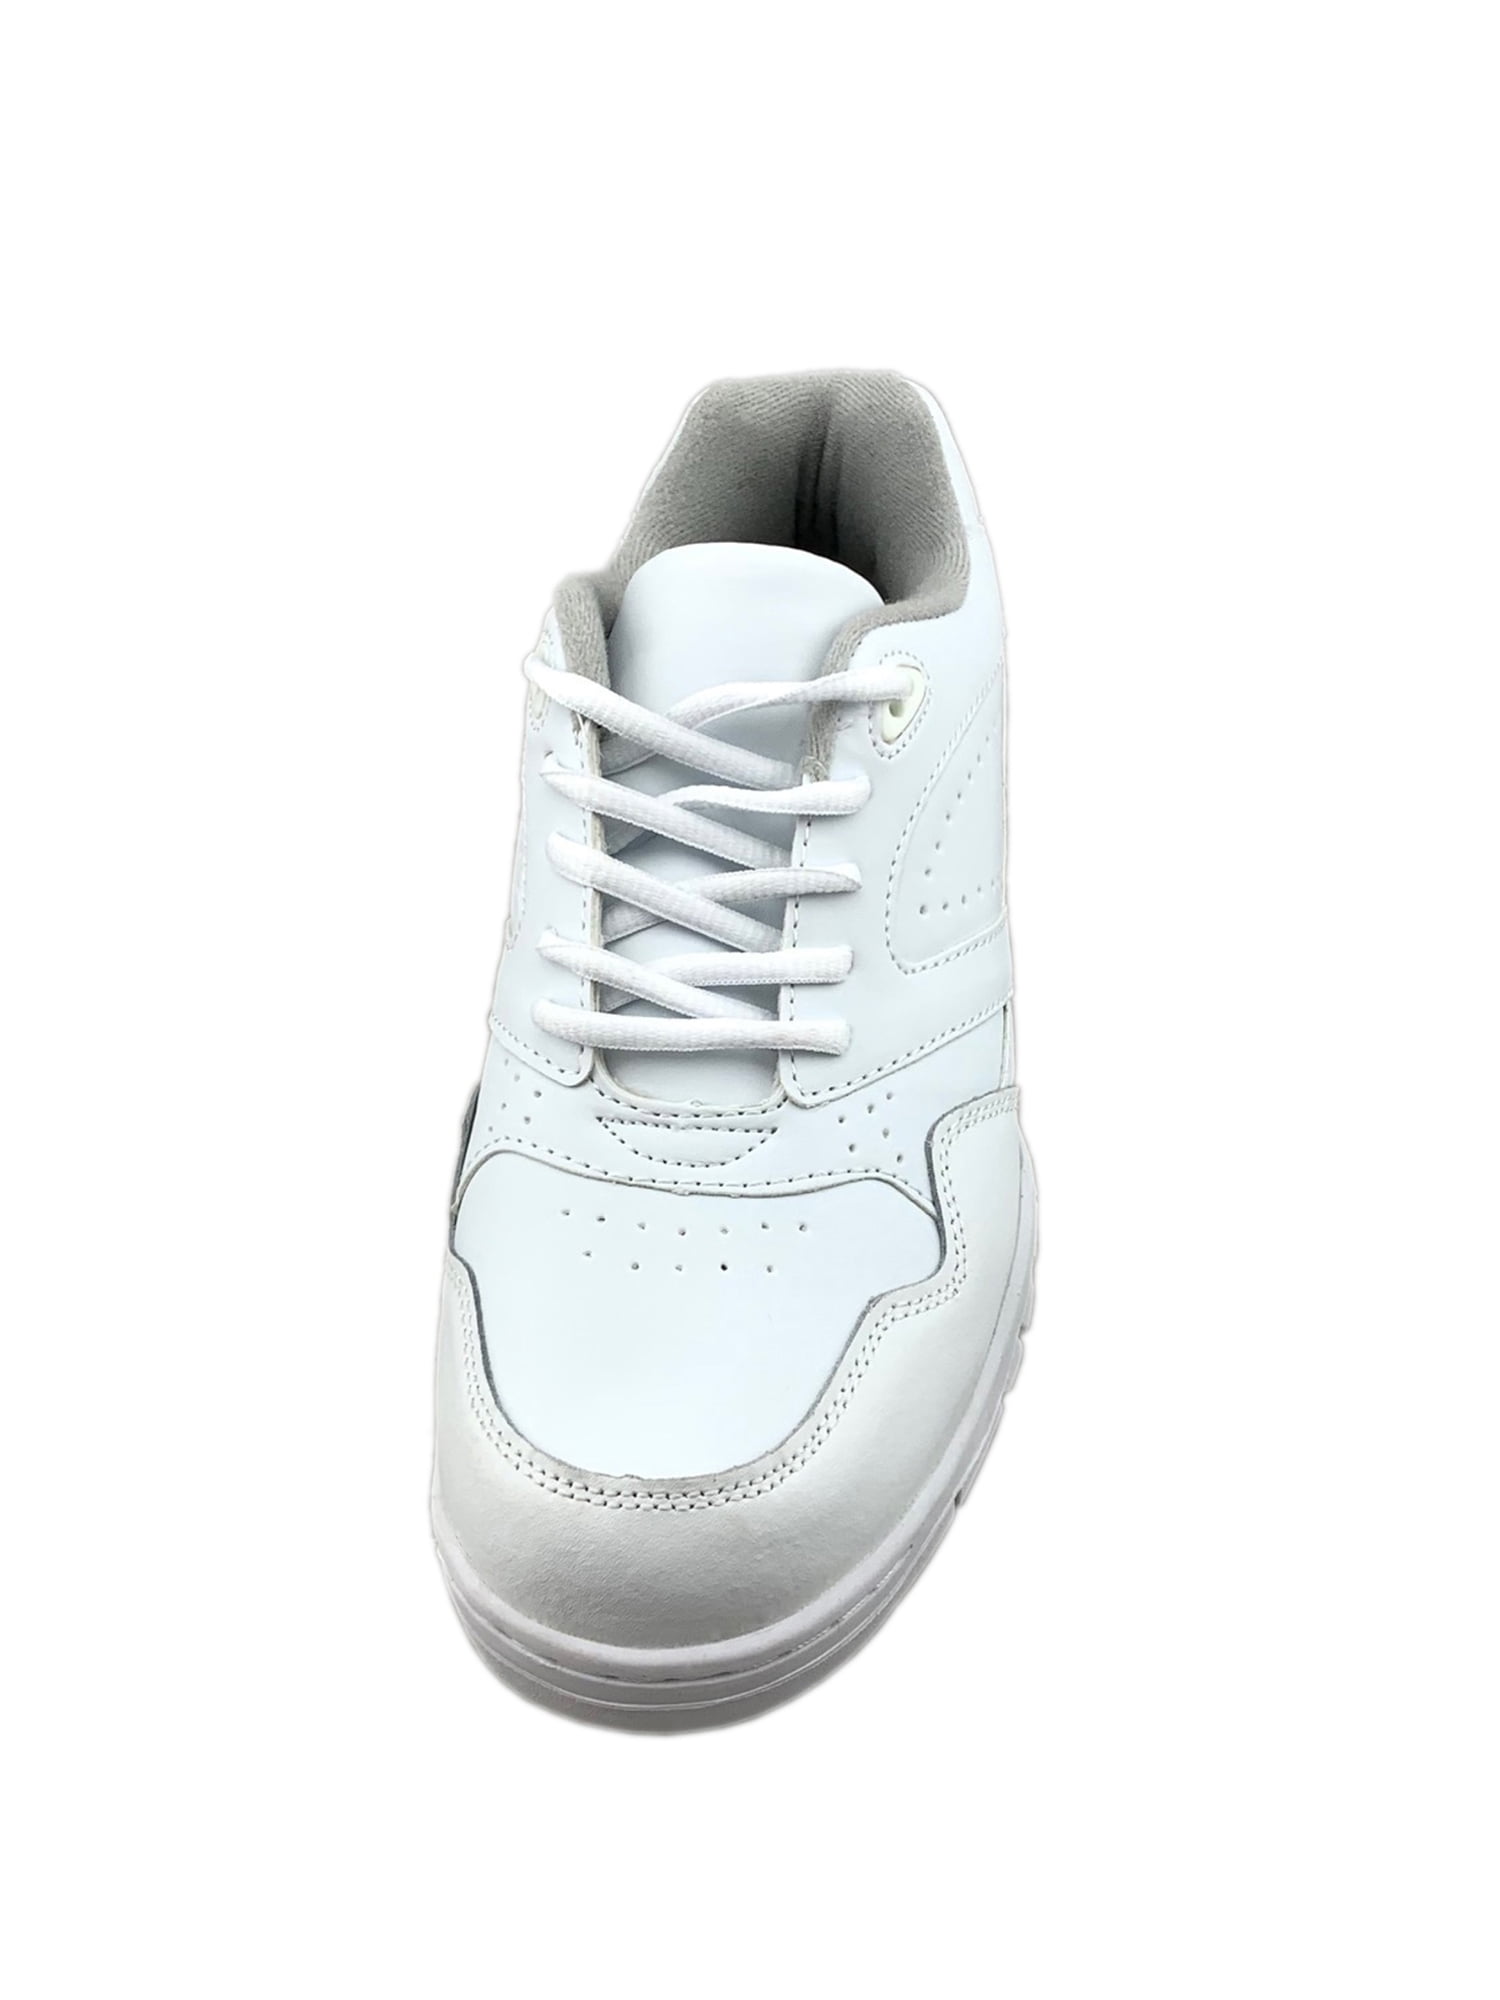 white non slip leather shoes